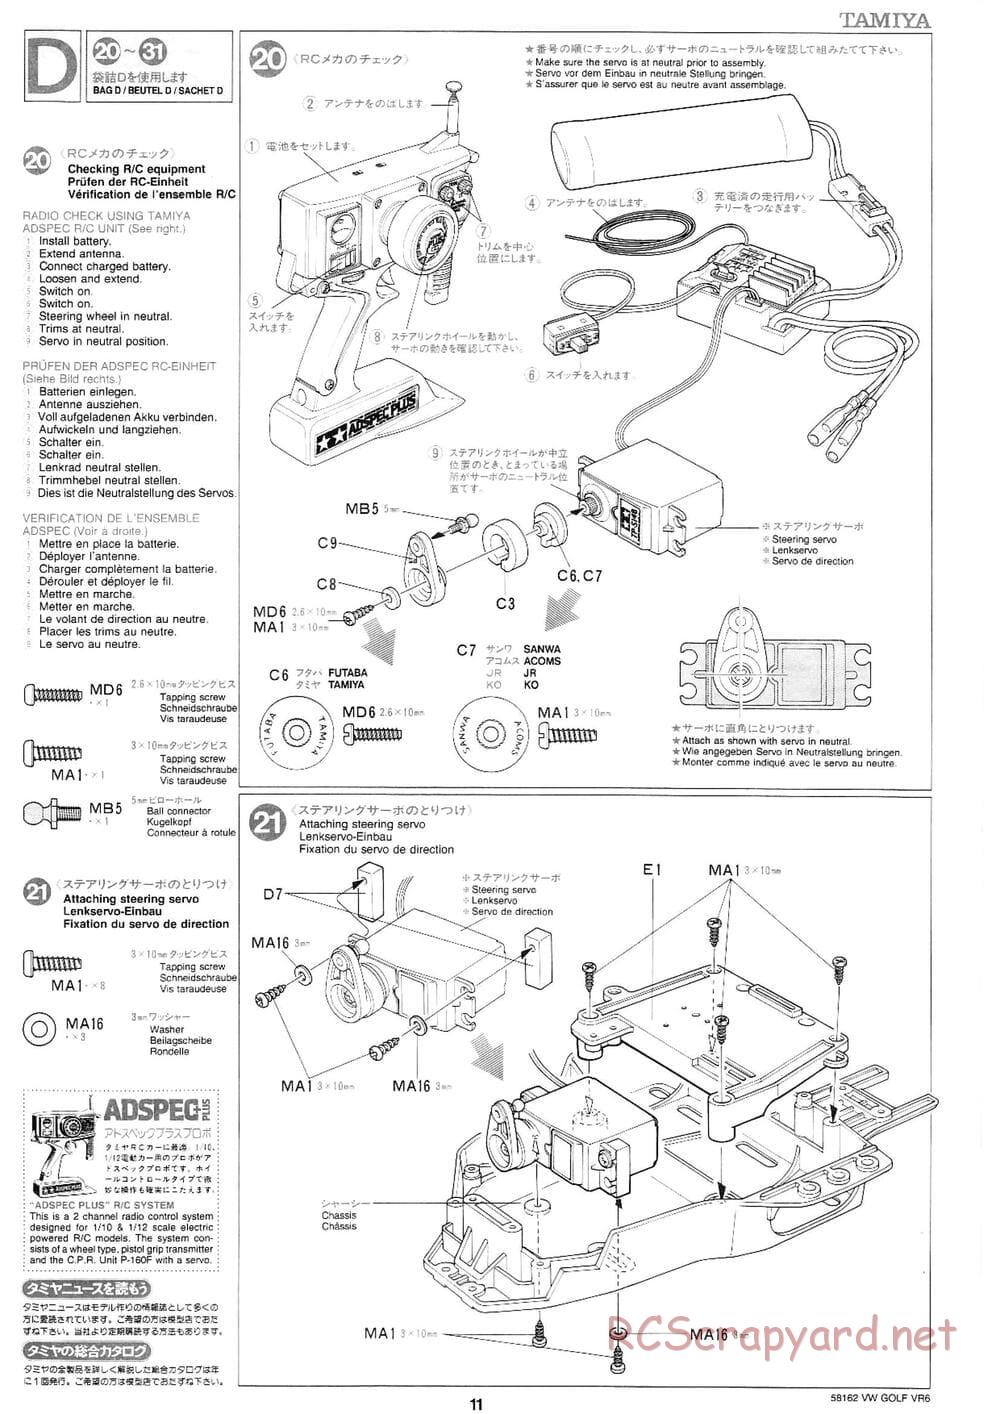 Tamiya - Volkswagen Golf VR6 - FF-01 Chassis - Manual - Page 11